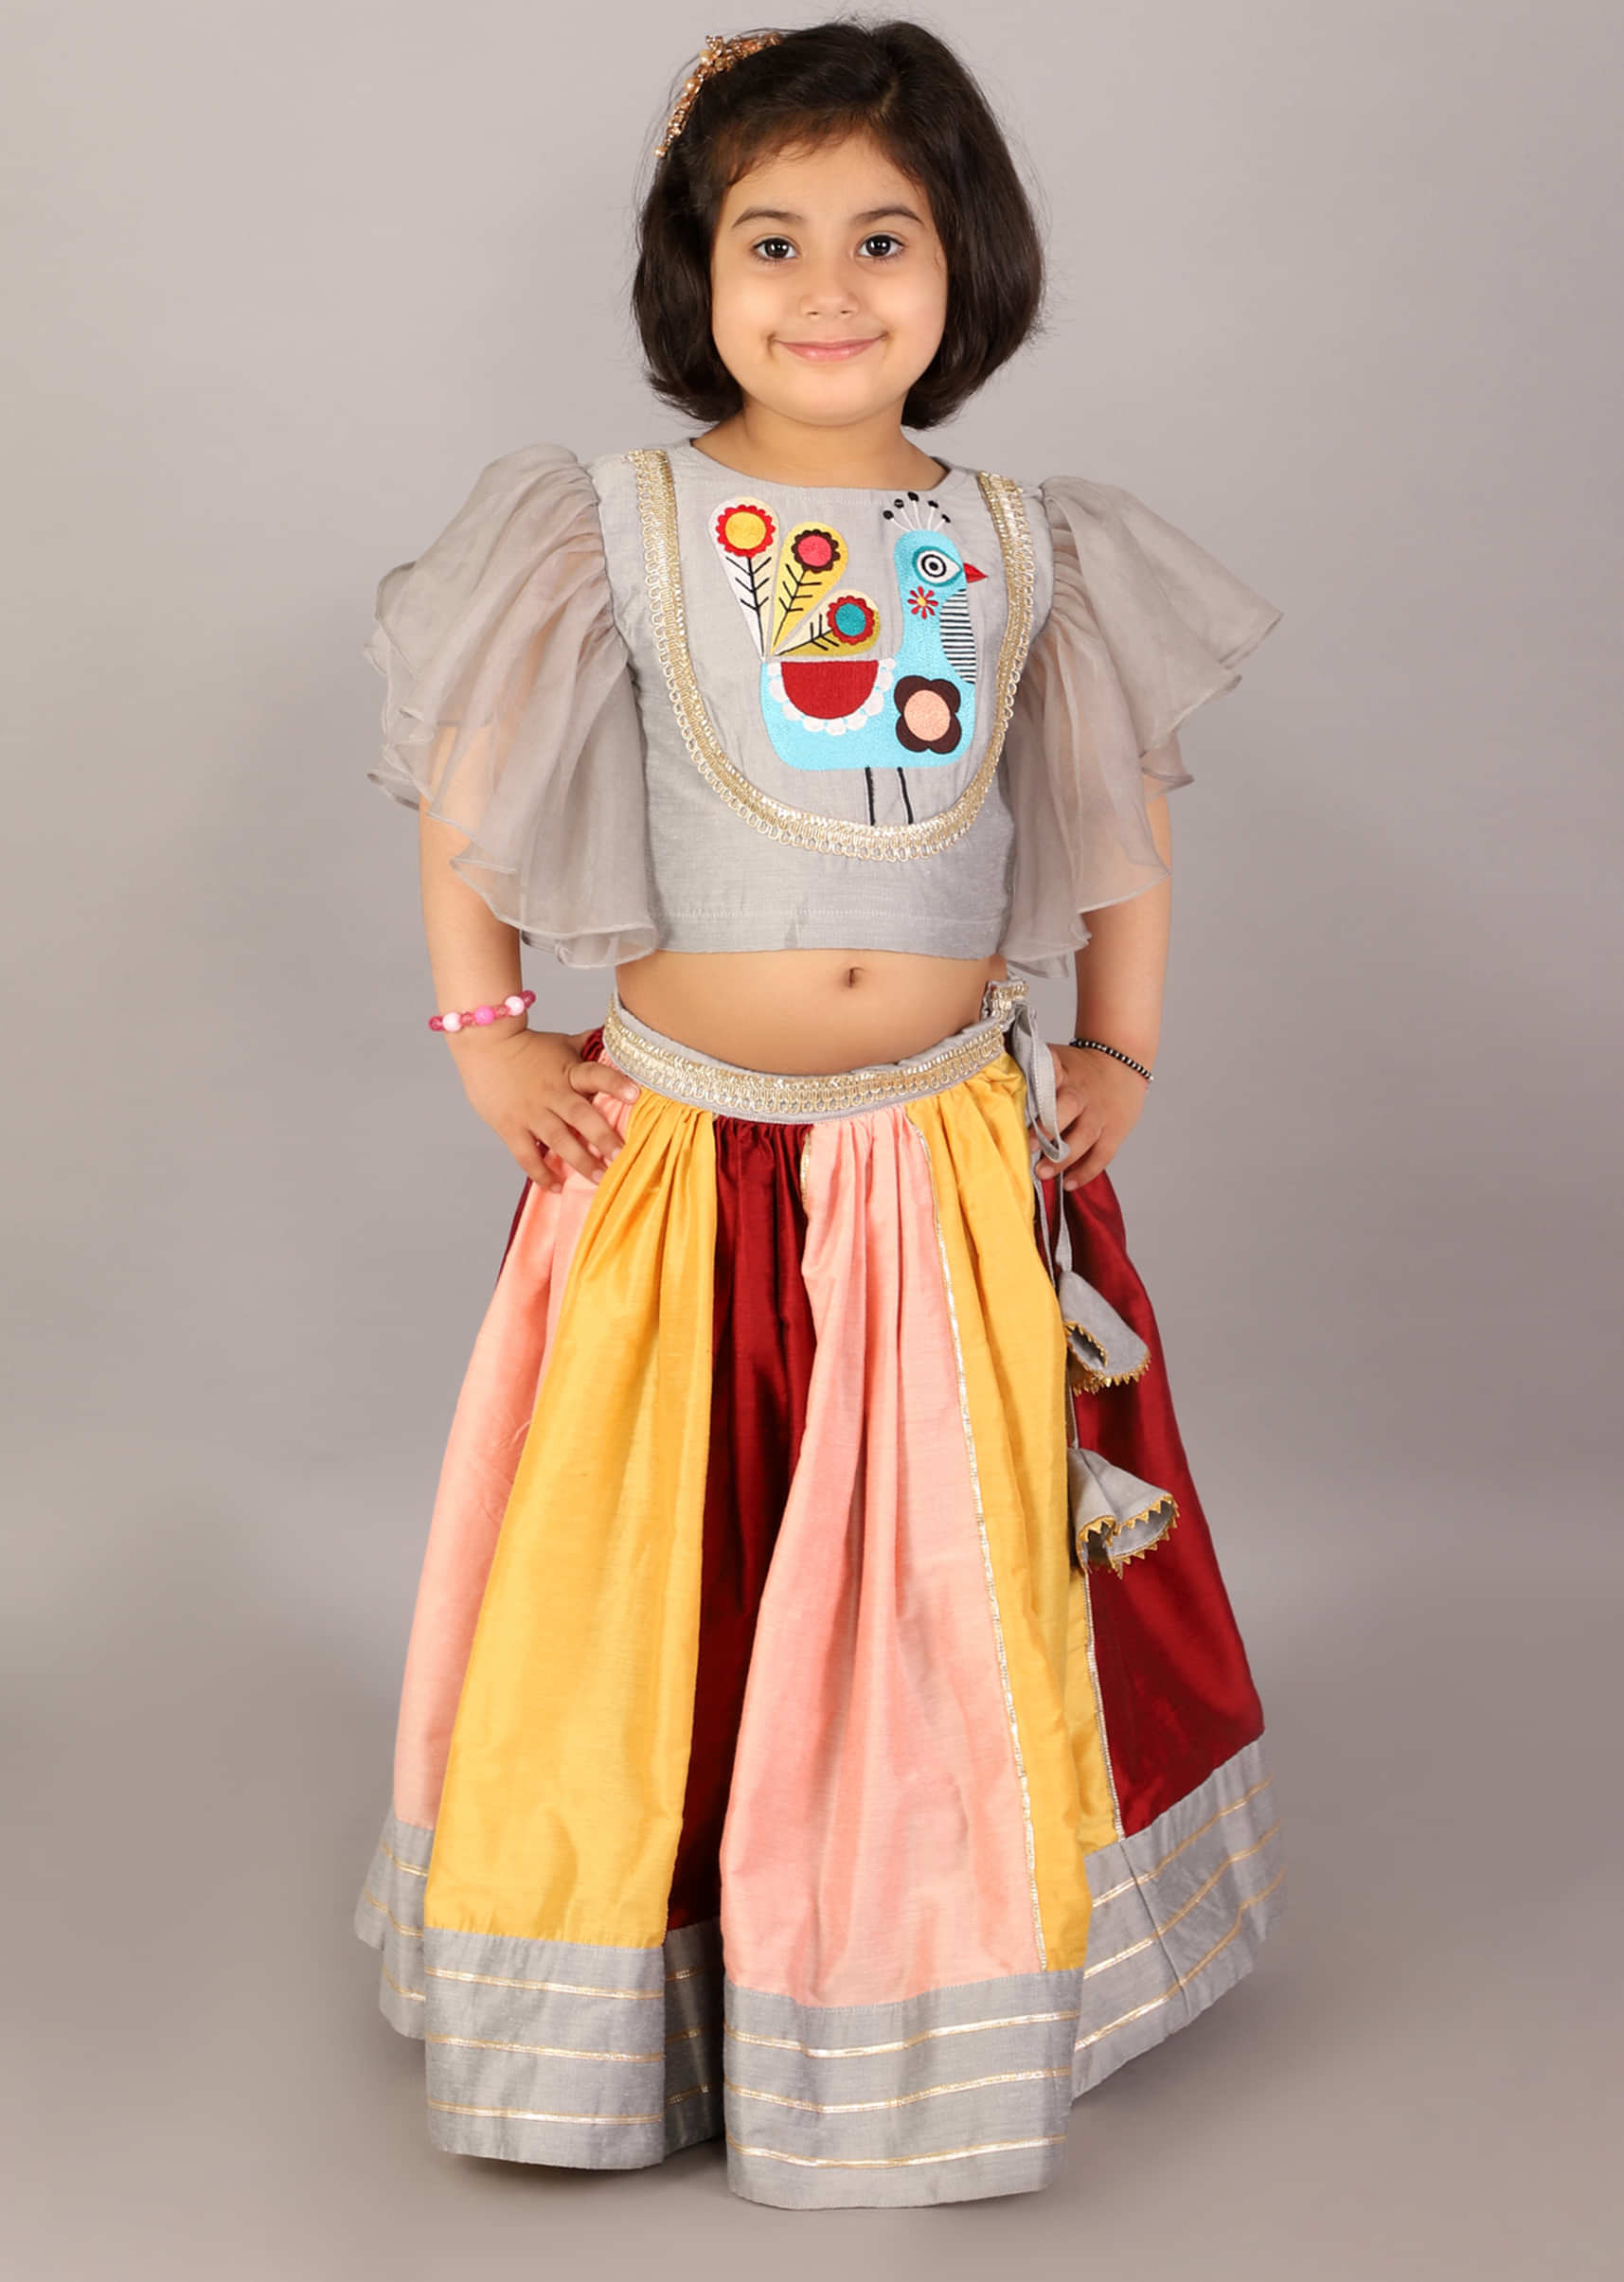 Multicolored 3-6M discount 61% NoName casual dress KIDS FASHION Dresses Embroidery 